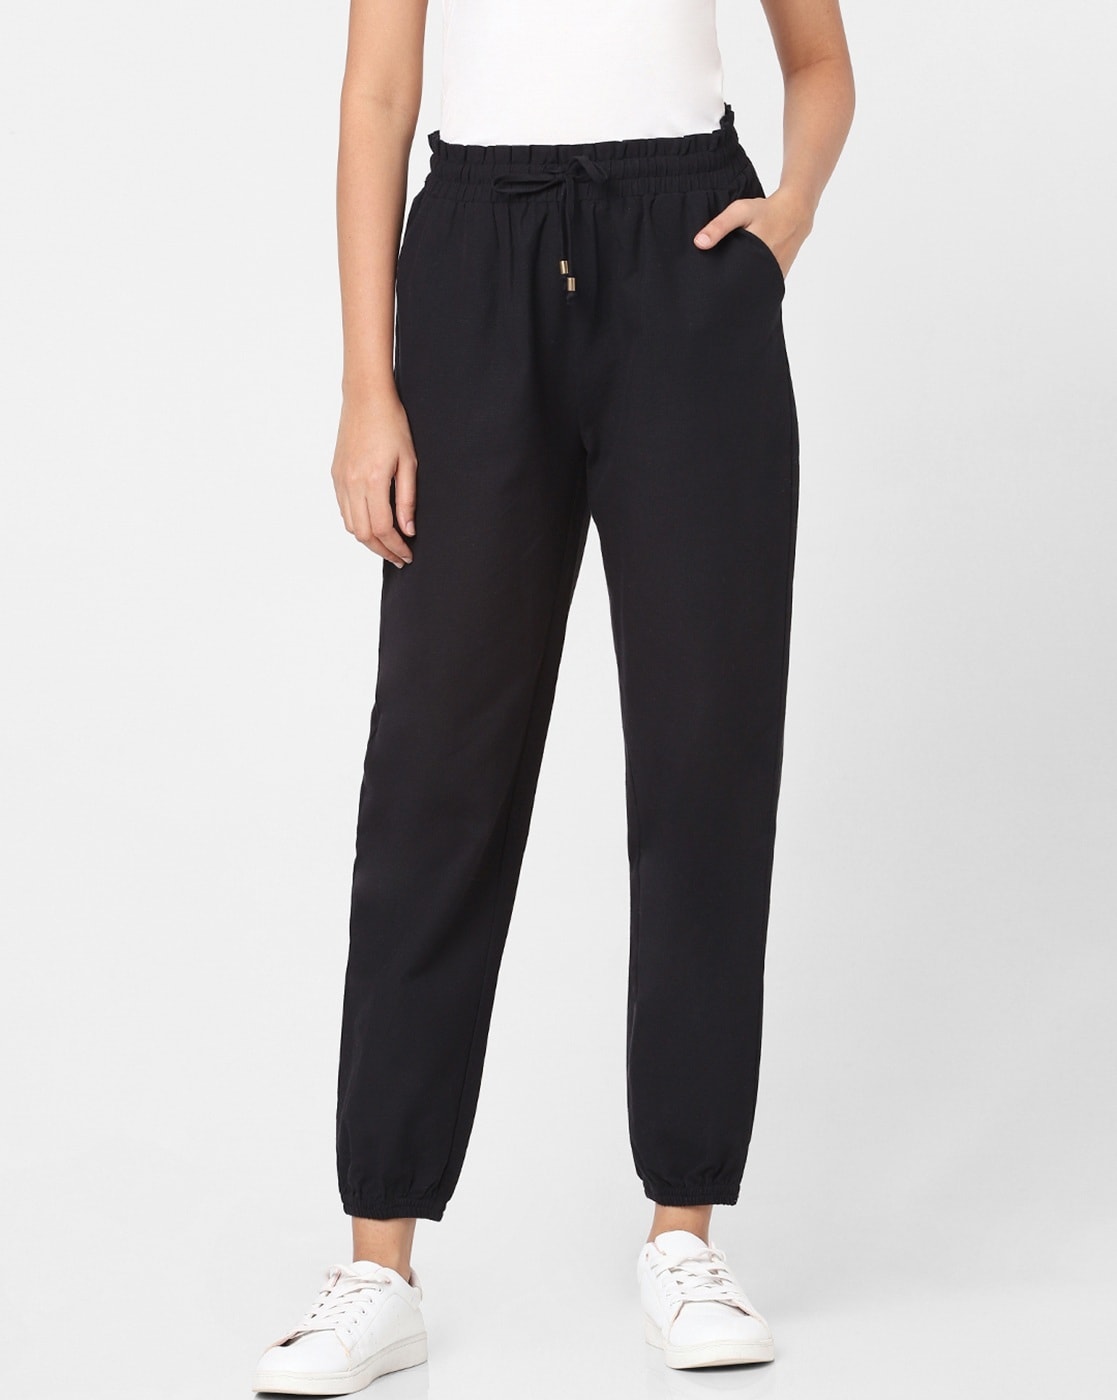 Buy Black Trousers & Pants for Women by Styli Online | Ajio.com